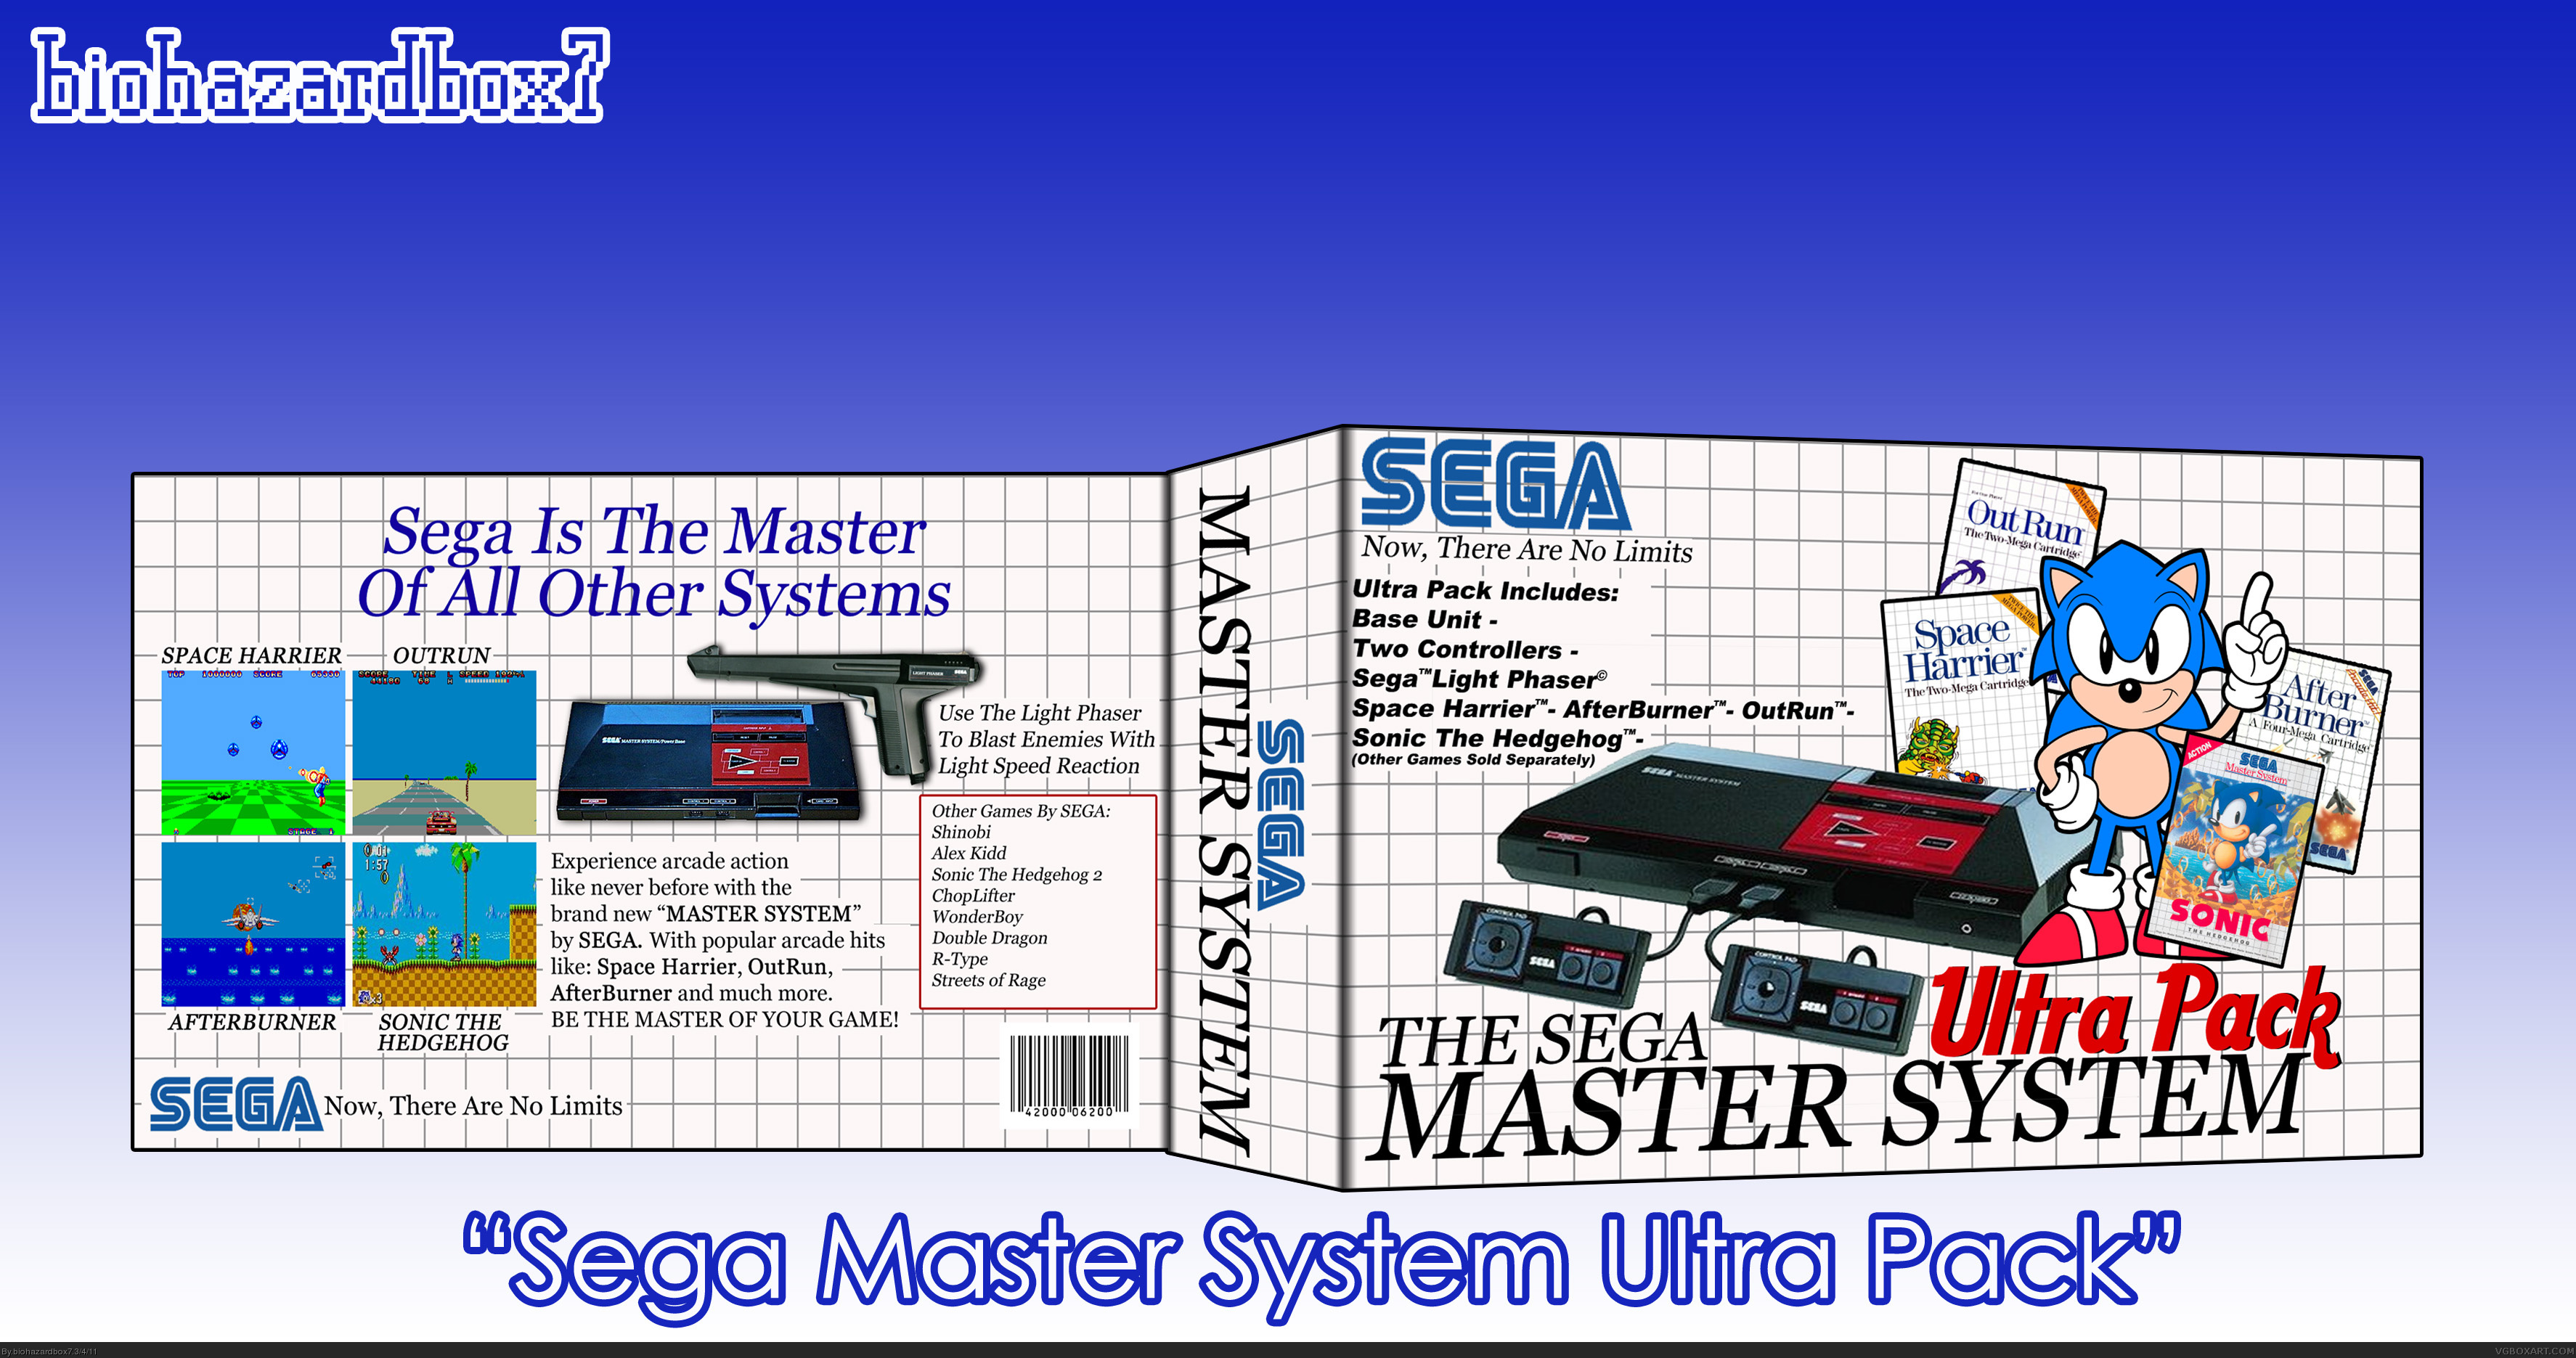 Sega Master System Ultra Pack box cover